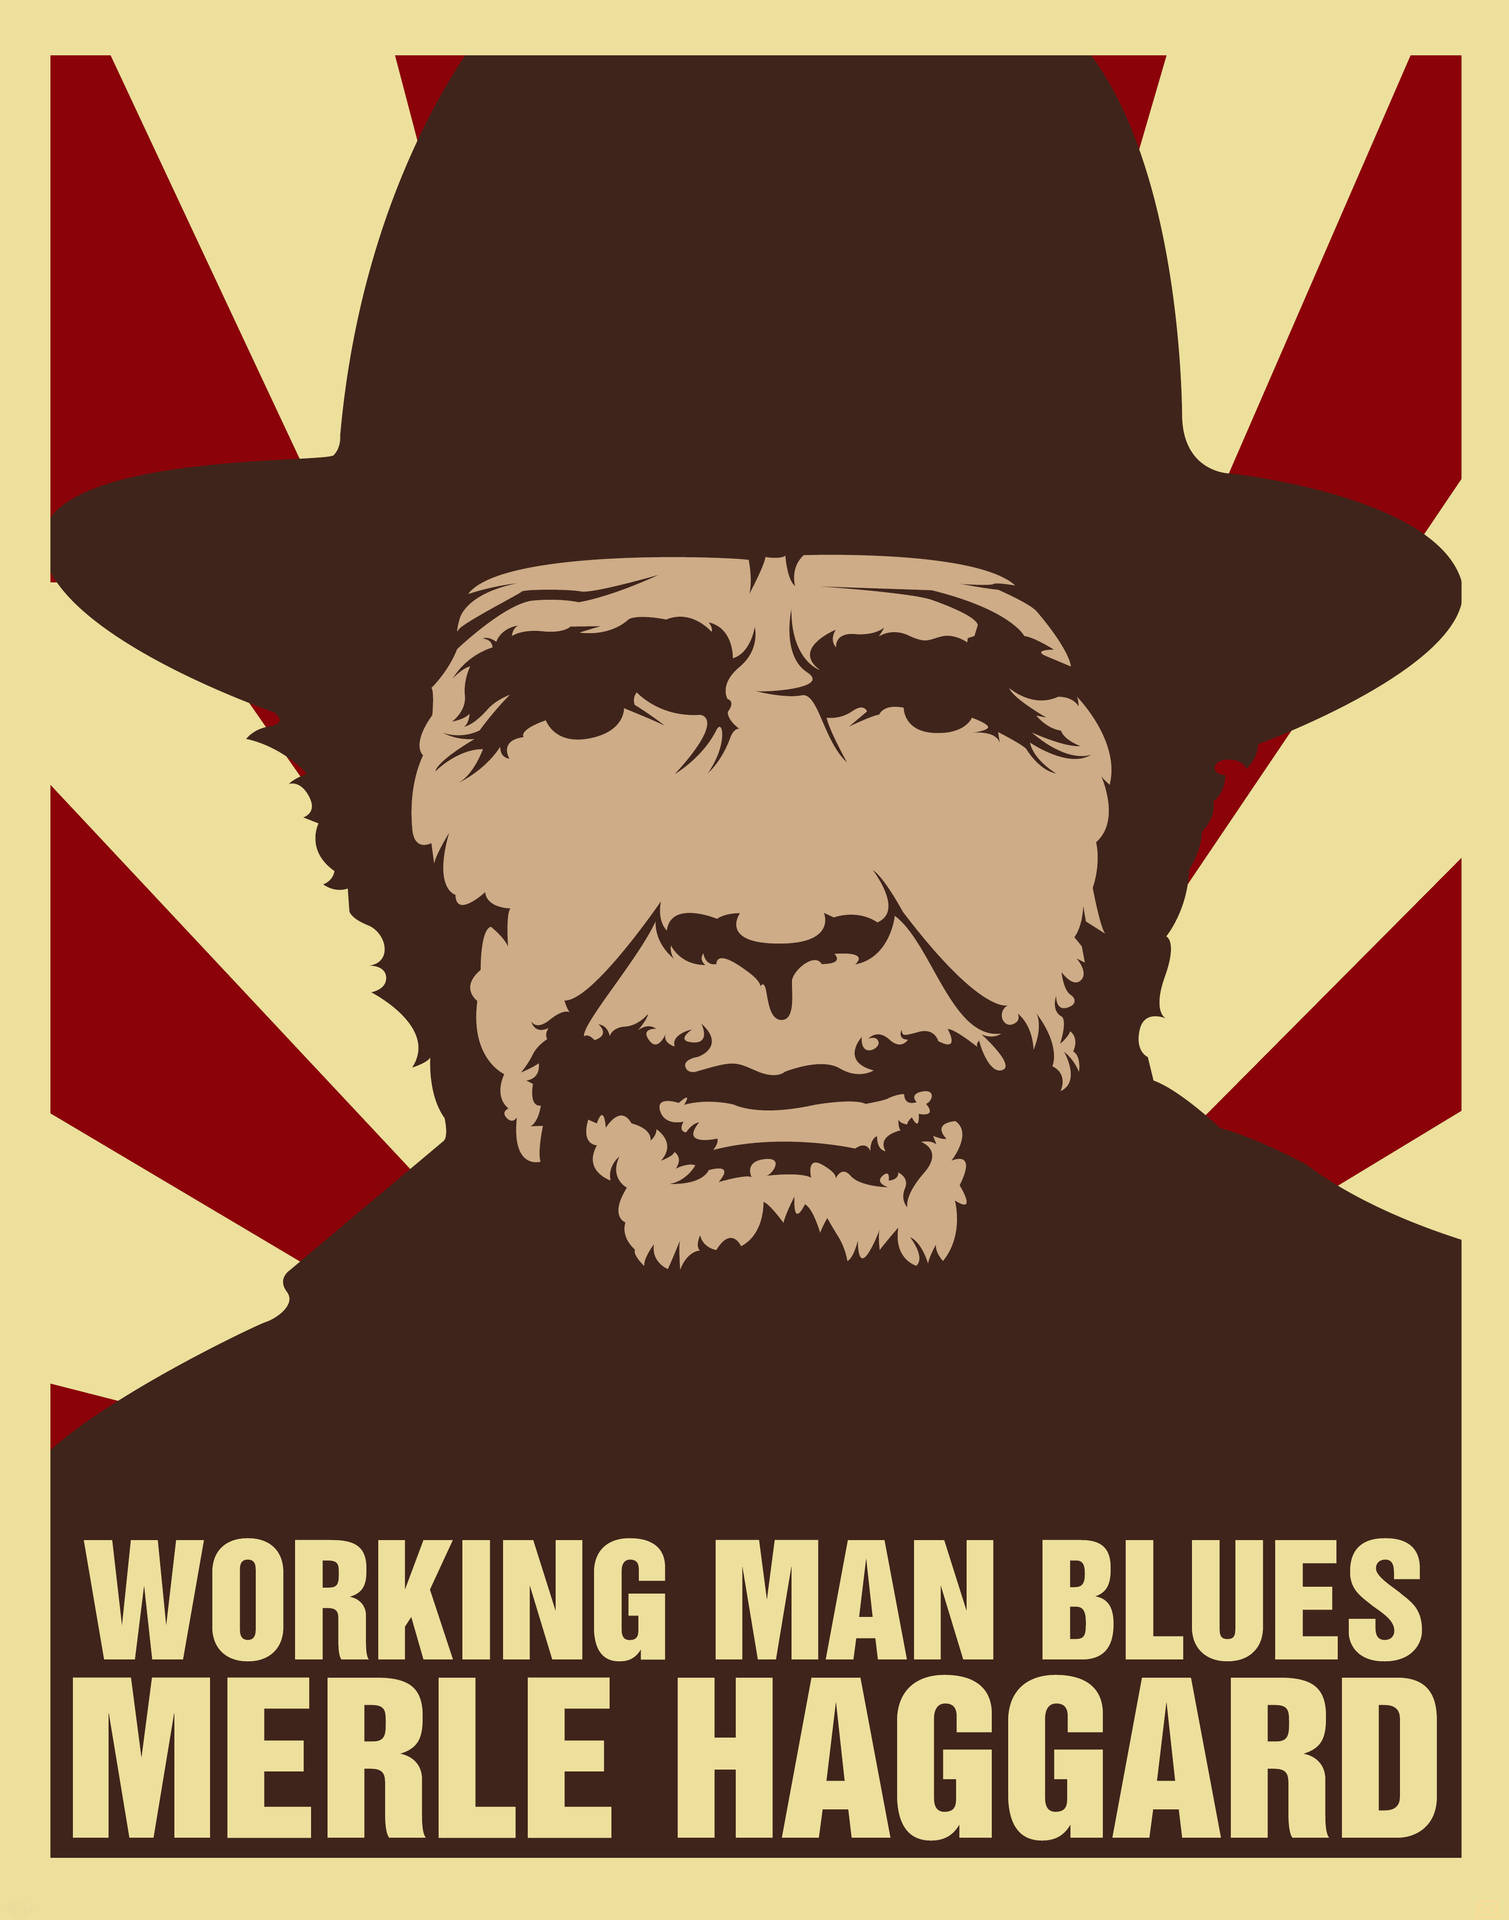 Working Man Blues Merle Haggard Wallpaper